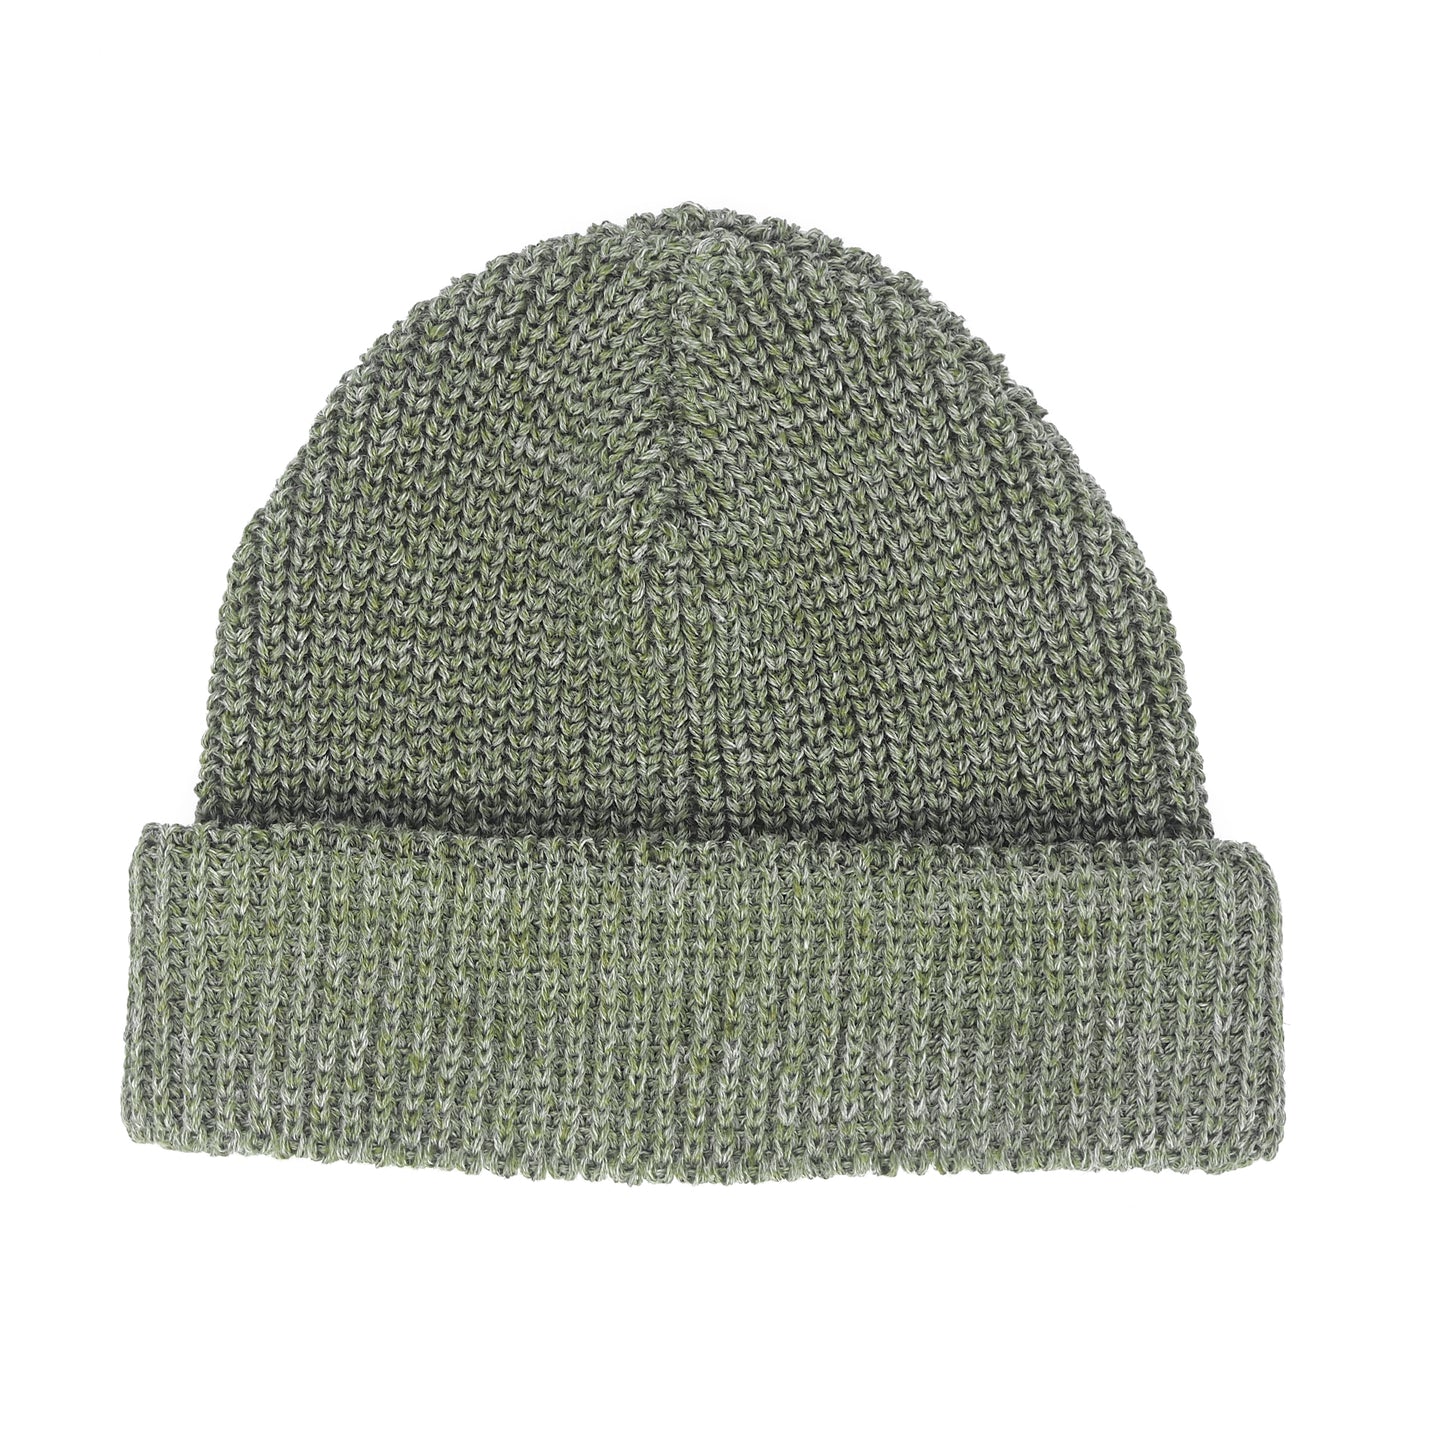 Knit Line Watch Cap // Cotton, Linen - Olive Green